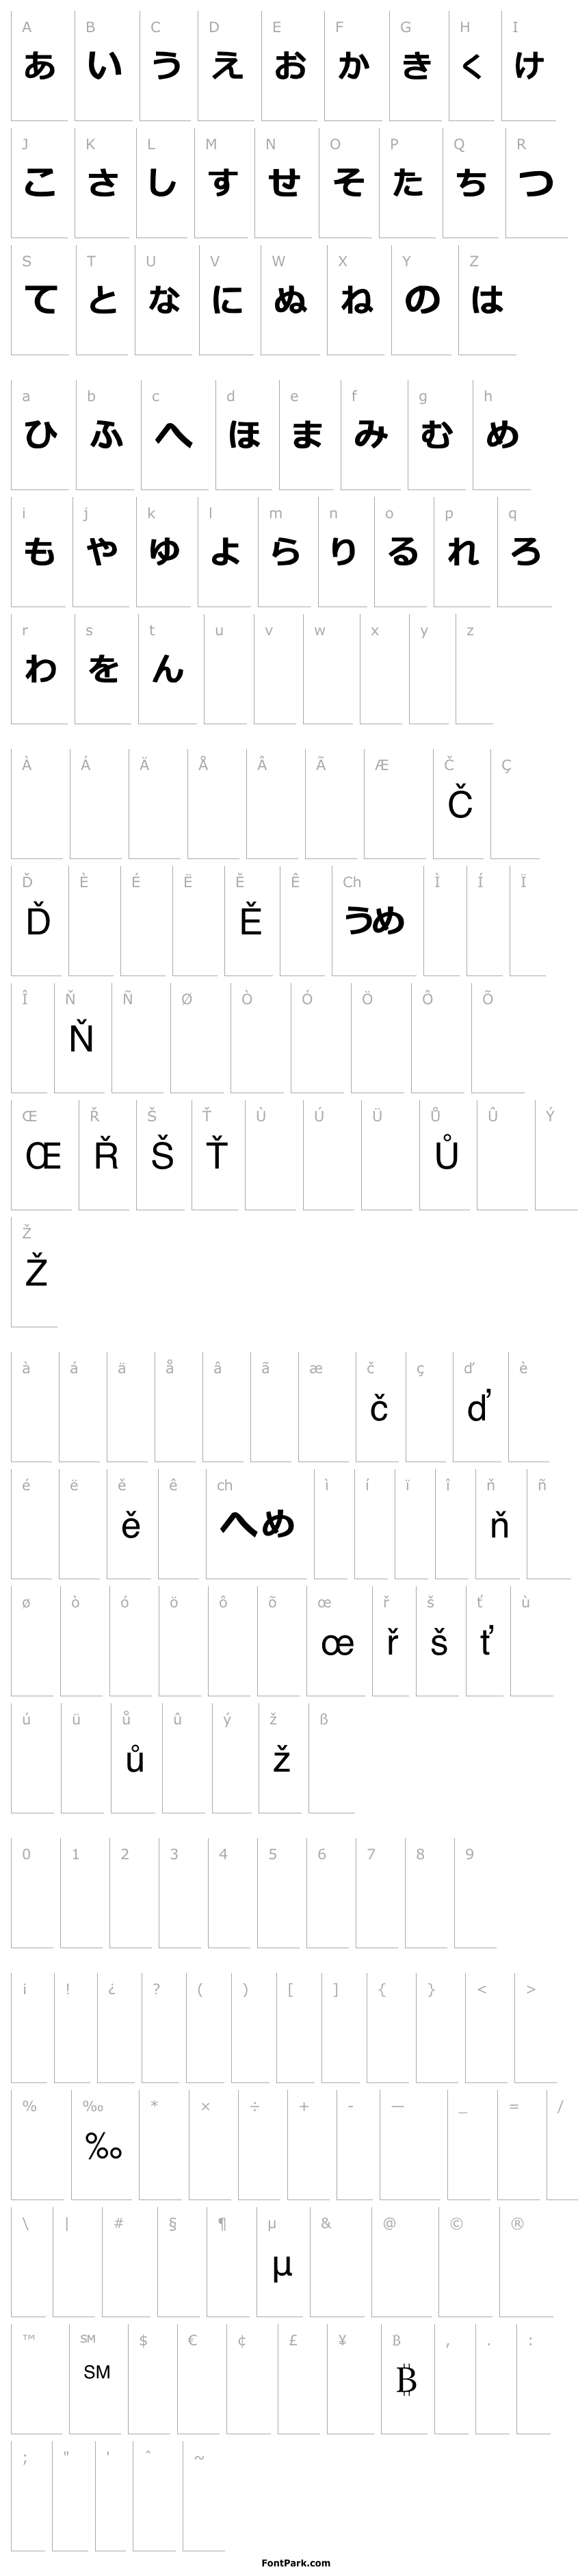 Overview hiragana tfb